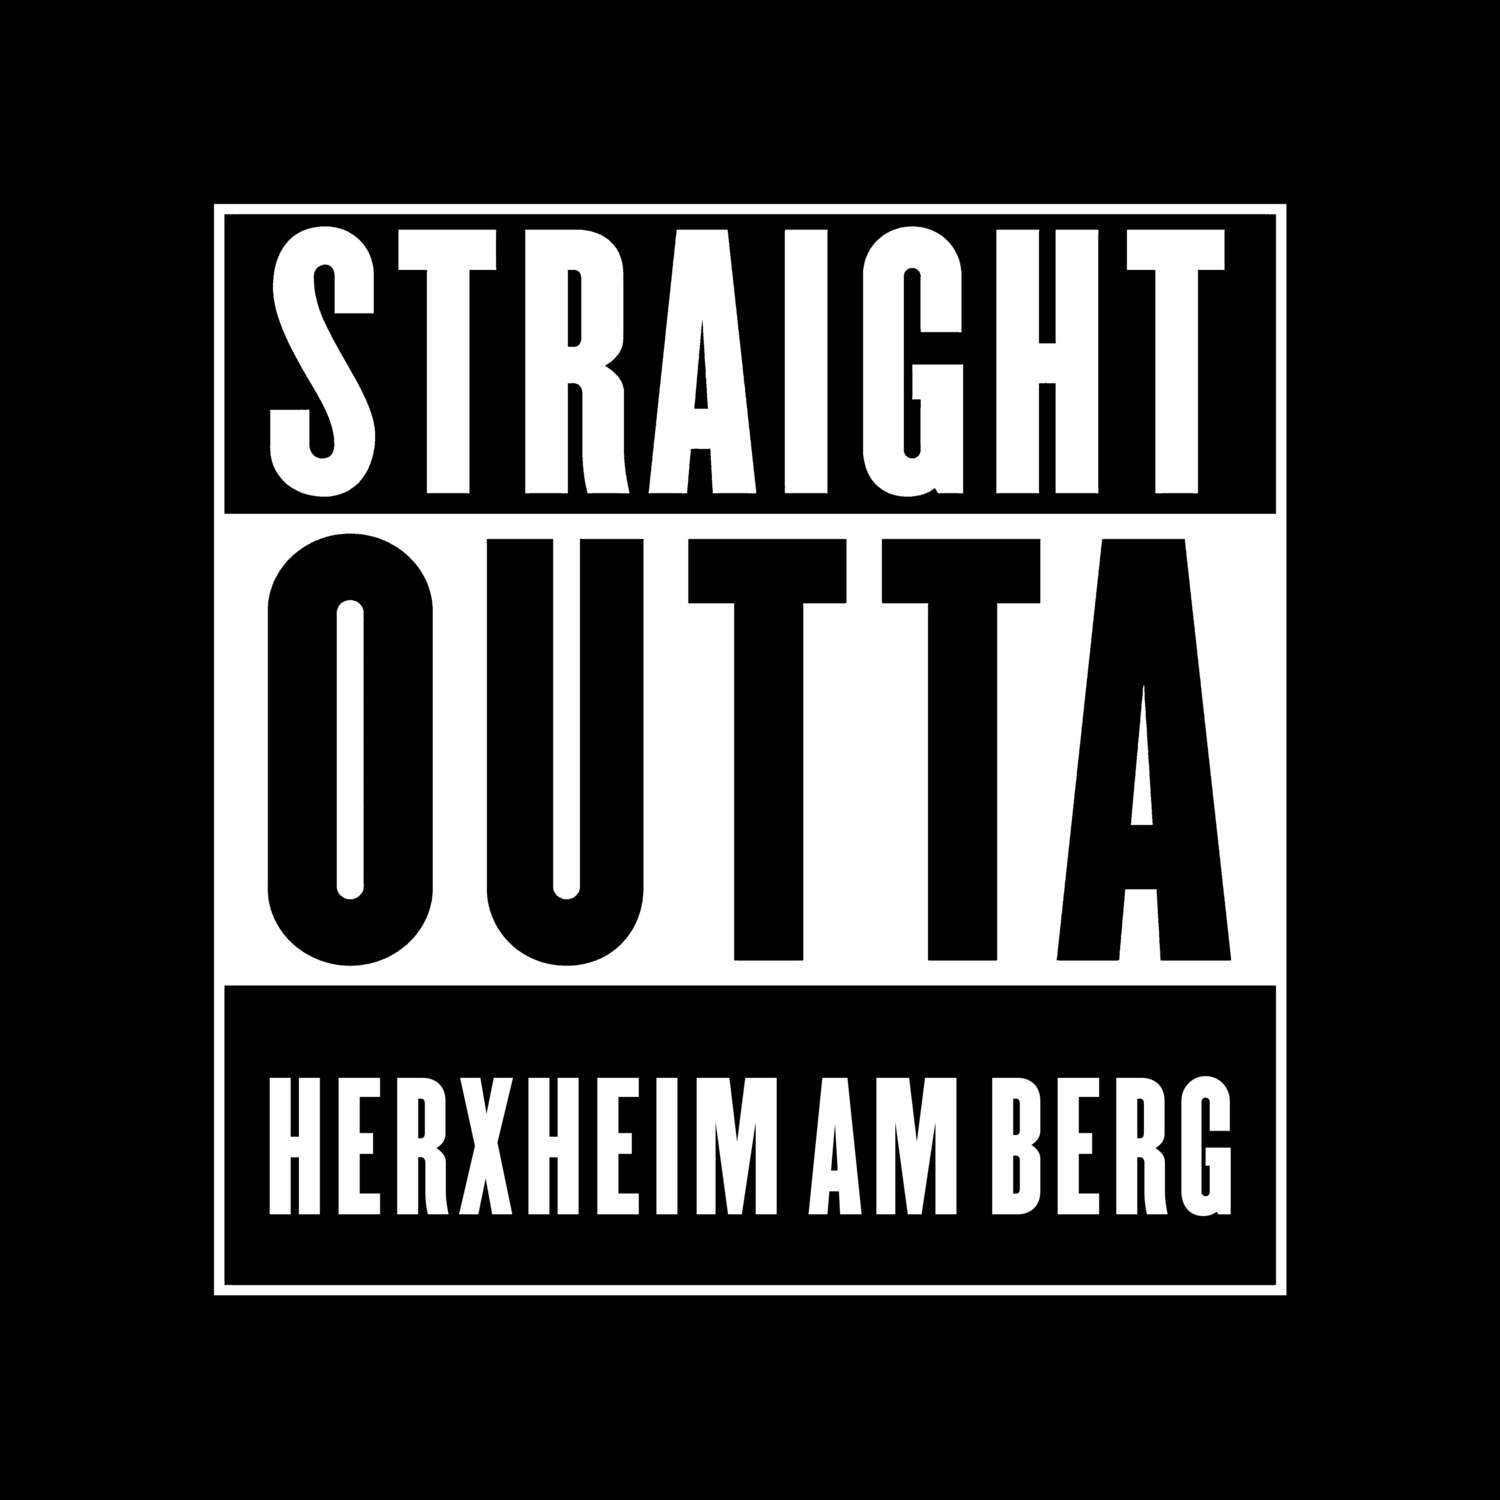 Herxheim am Berg T-Shirt »Straight Outta«